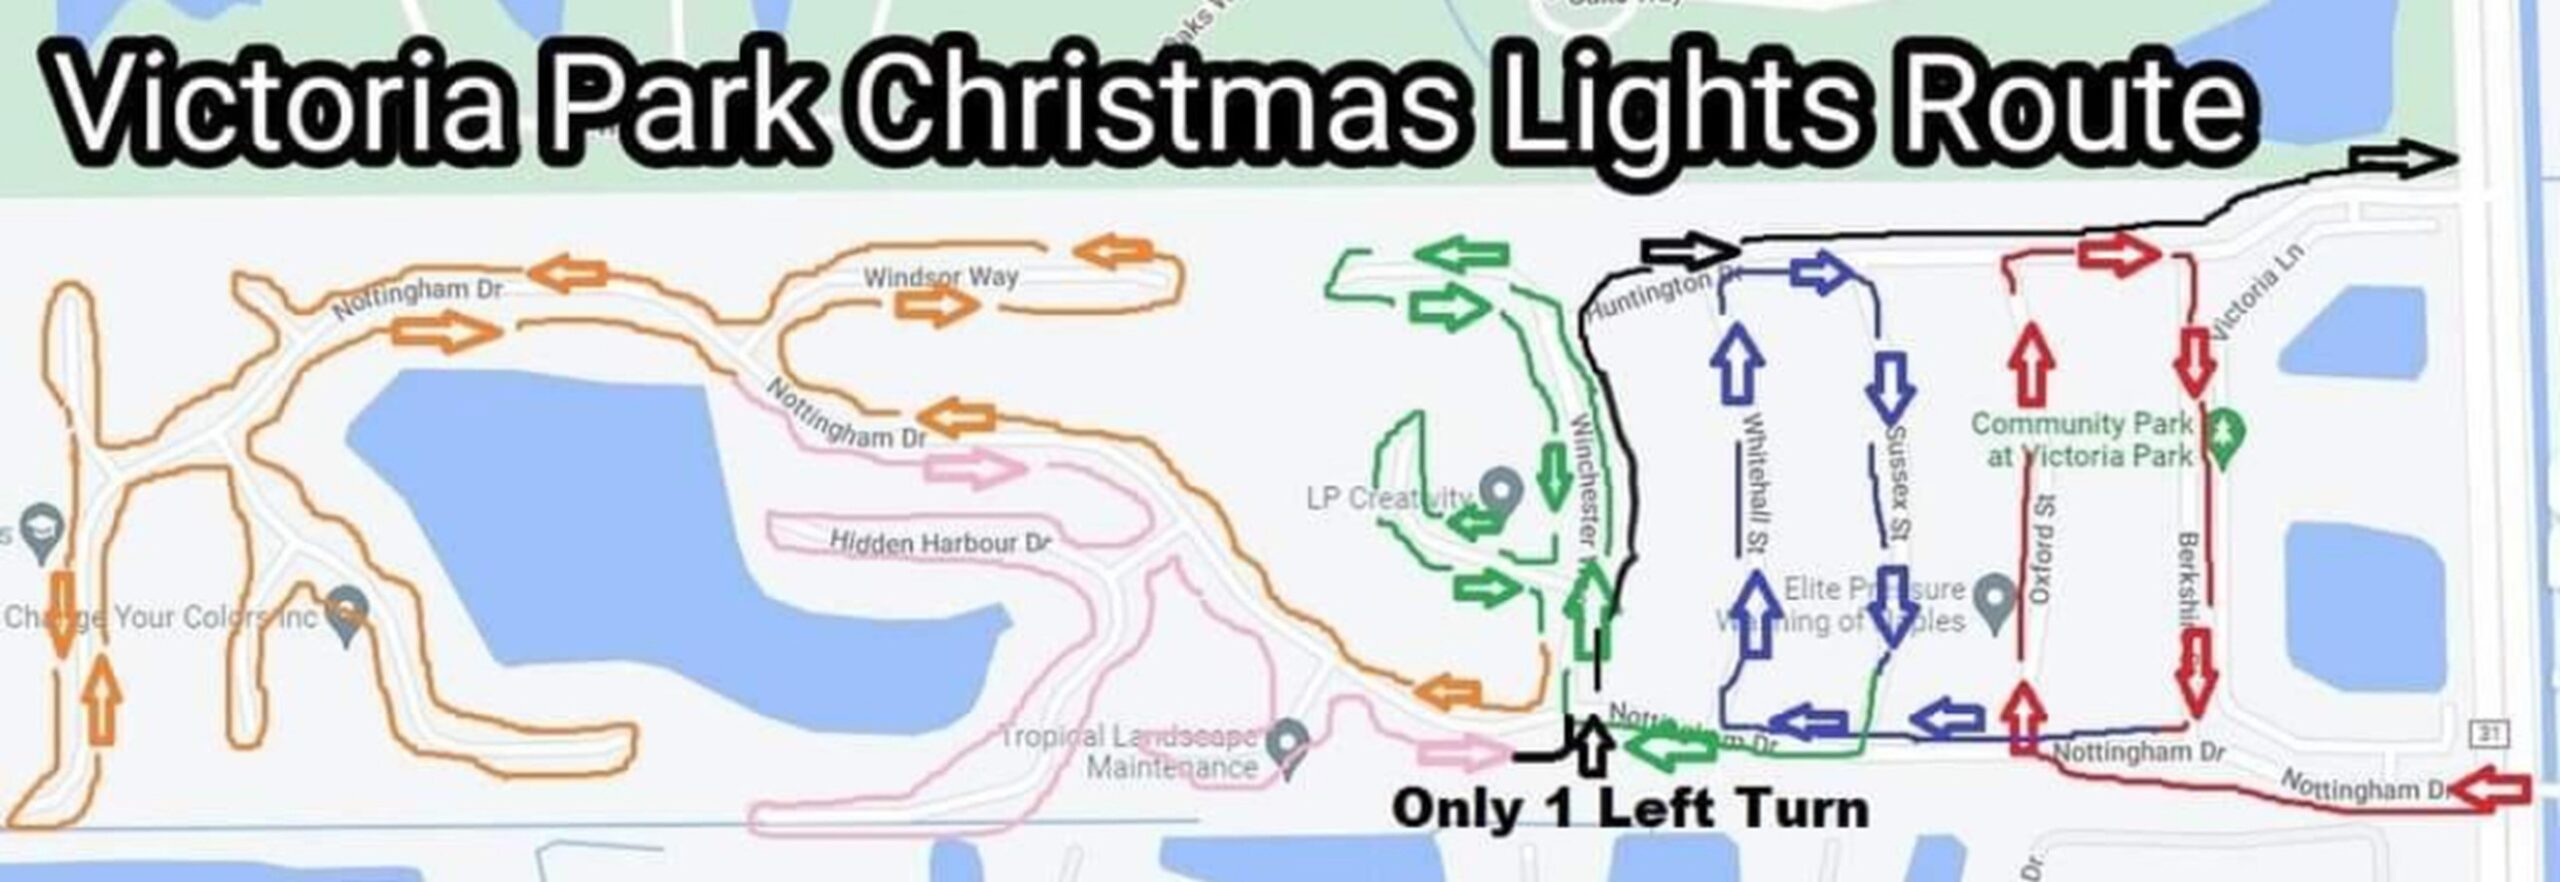 Victoria Park Christmas Lights Route